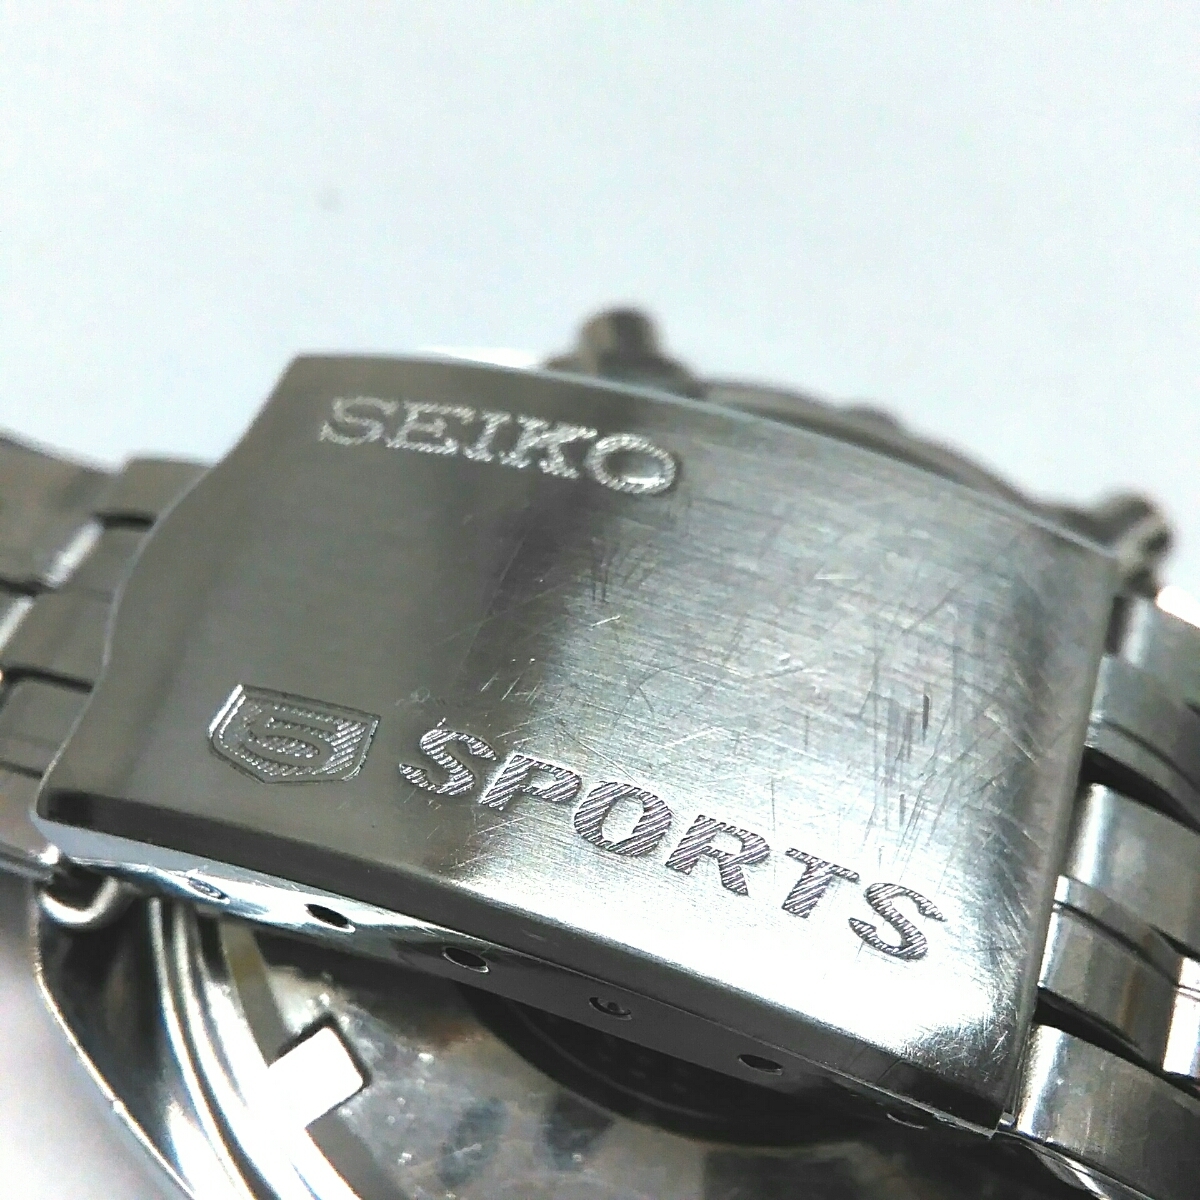 SEIKO 5運動精工五運動速度計時器速度計時器7017 - 8000 1971 OH操作項目 原文:SEIKO5 Sports セイコーファイブ スポーツ Speed Timer スピードタイマー 7017-8000 1971年 OH済み 動作品